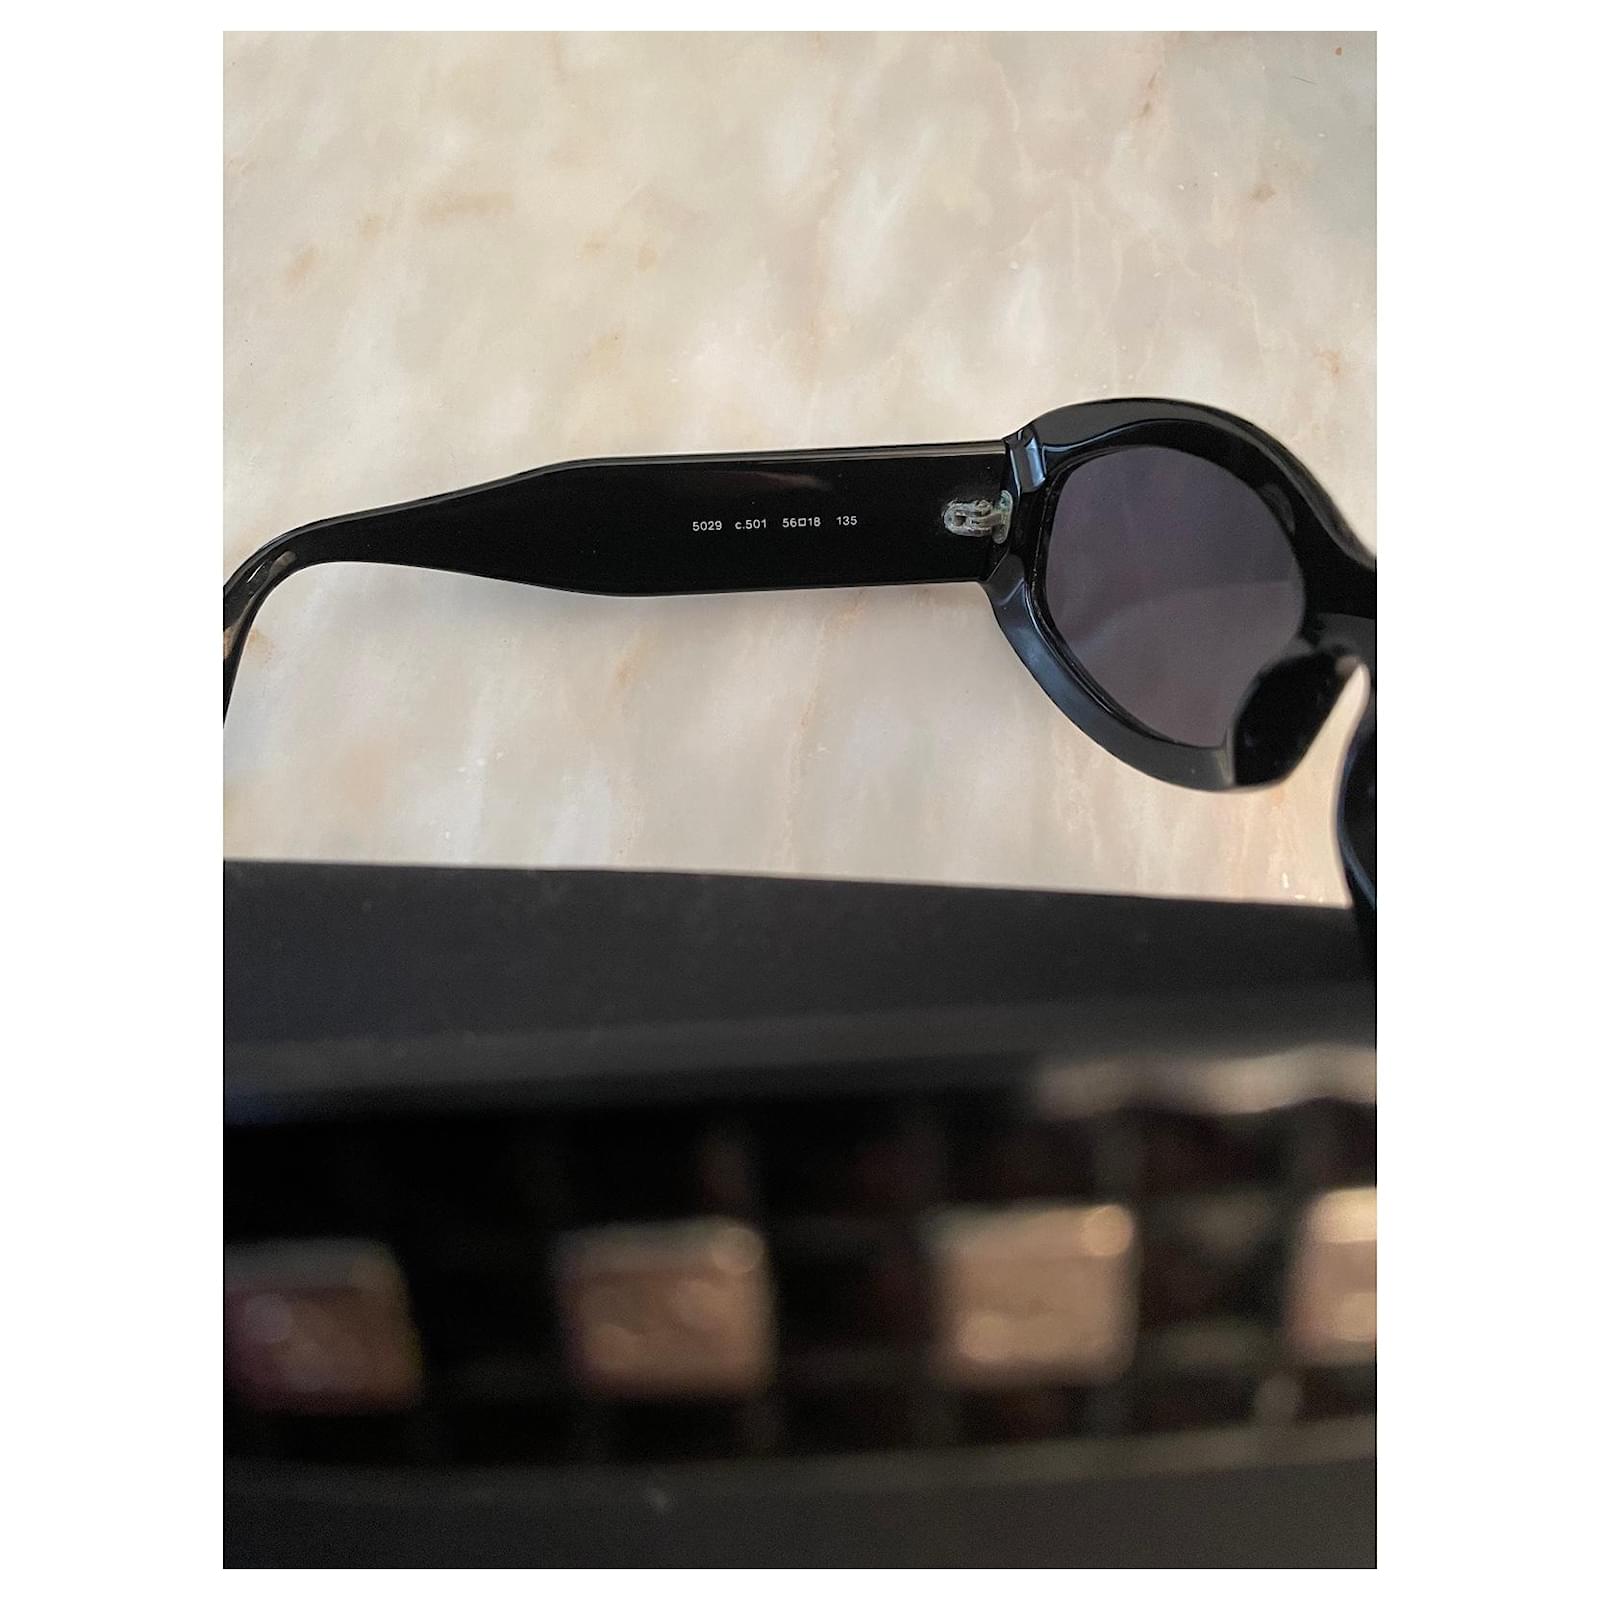 Chanel glasses 5029